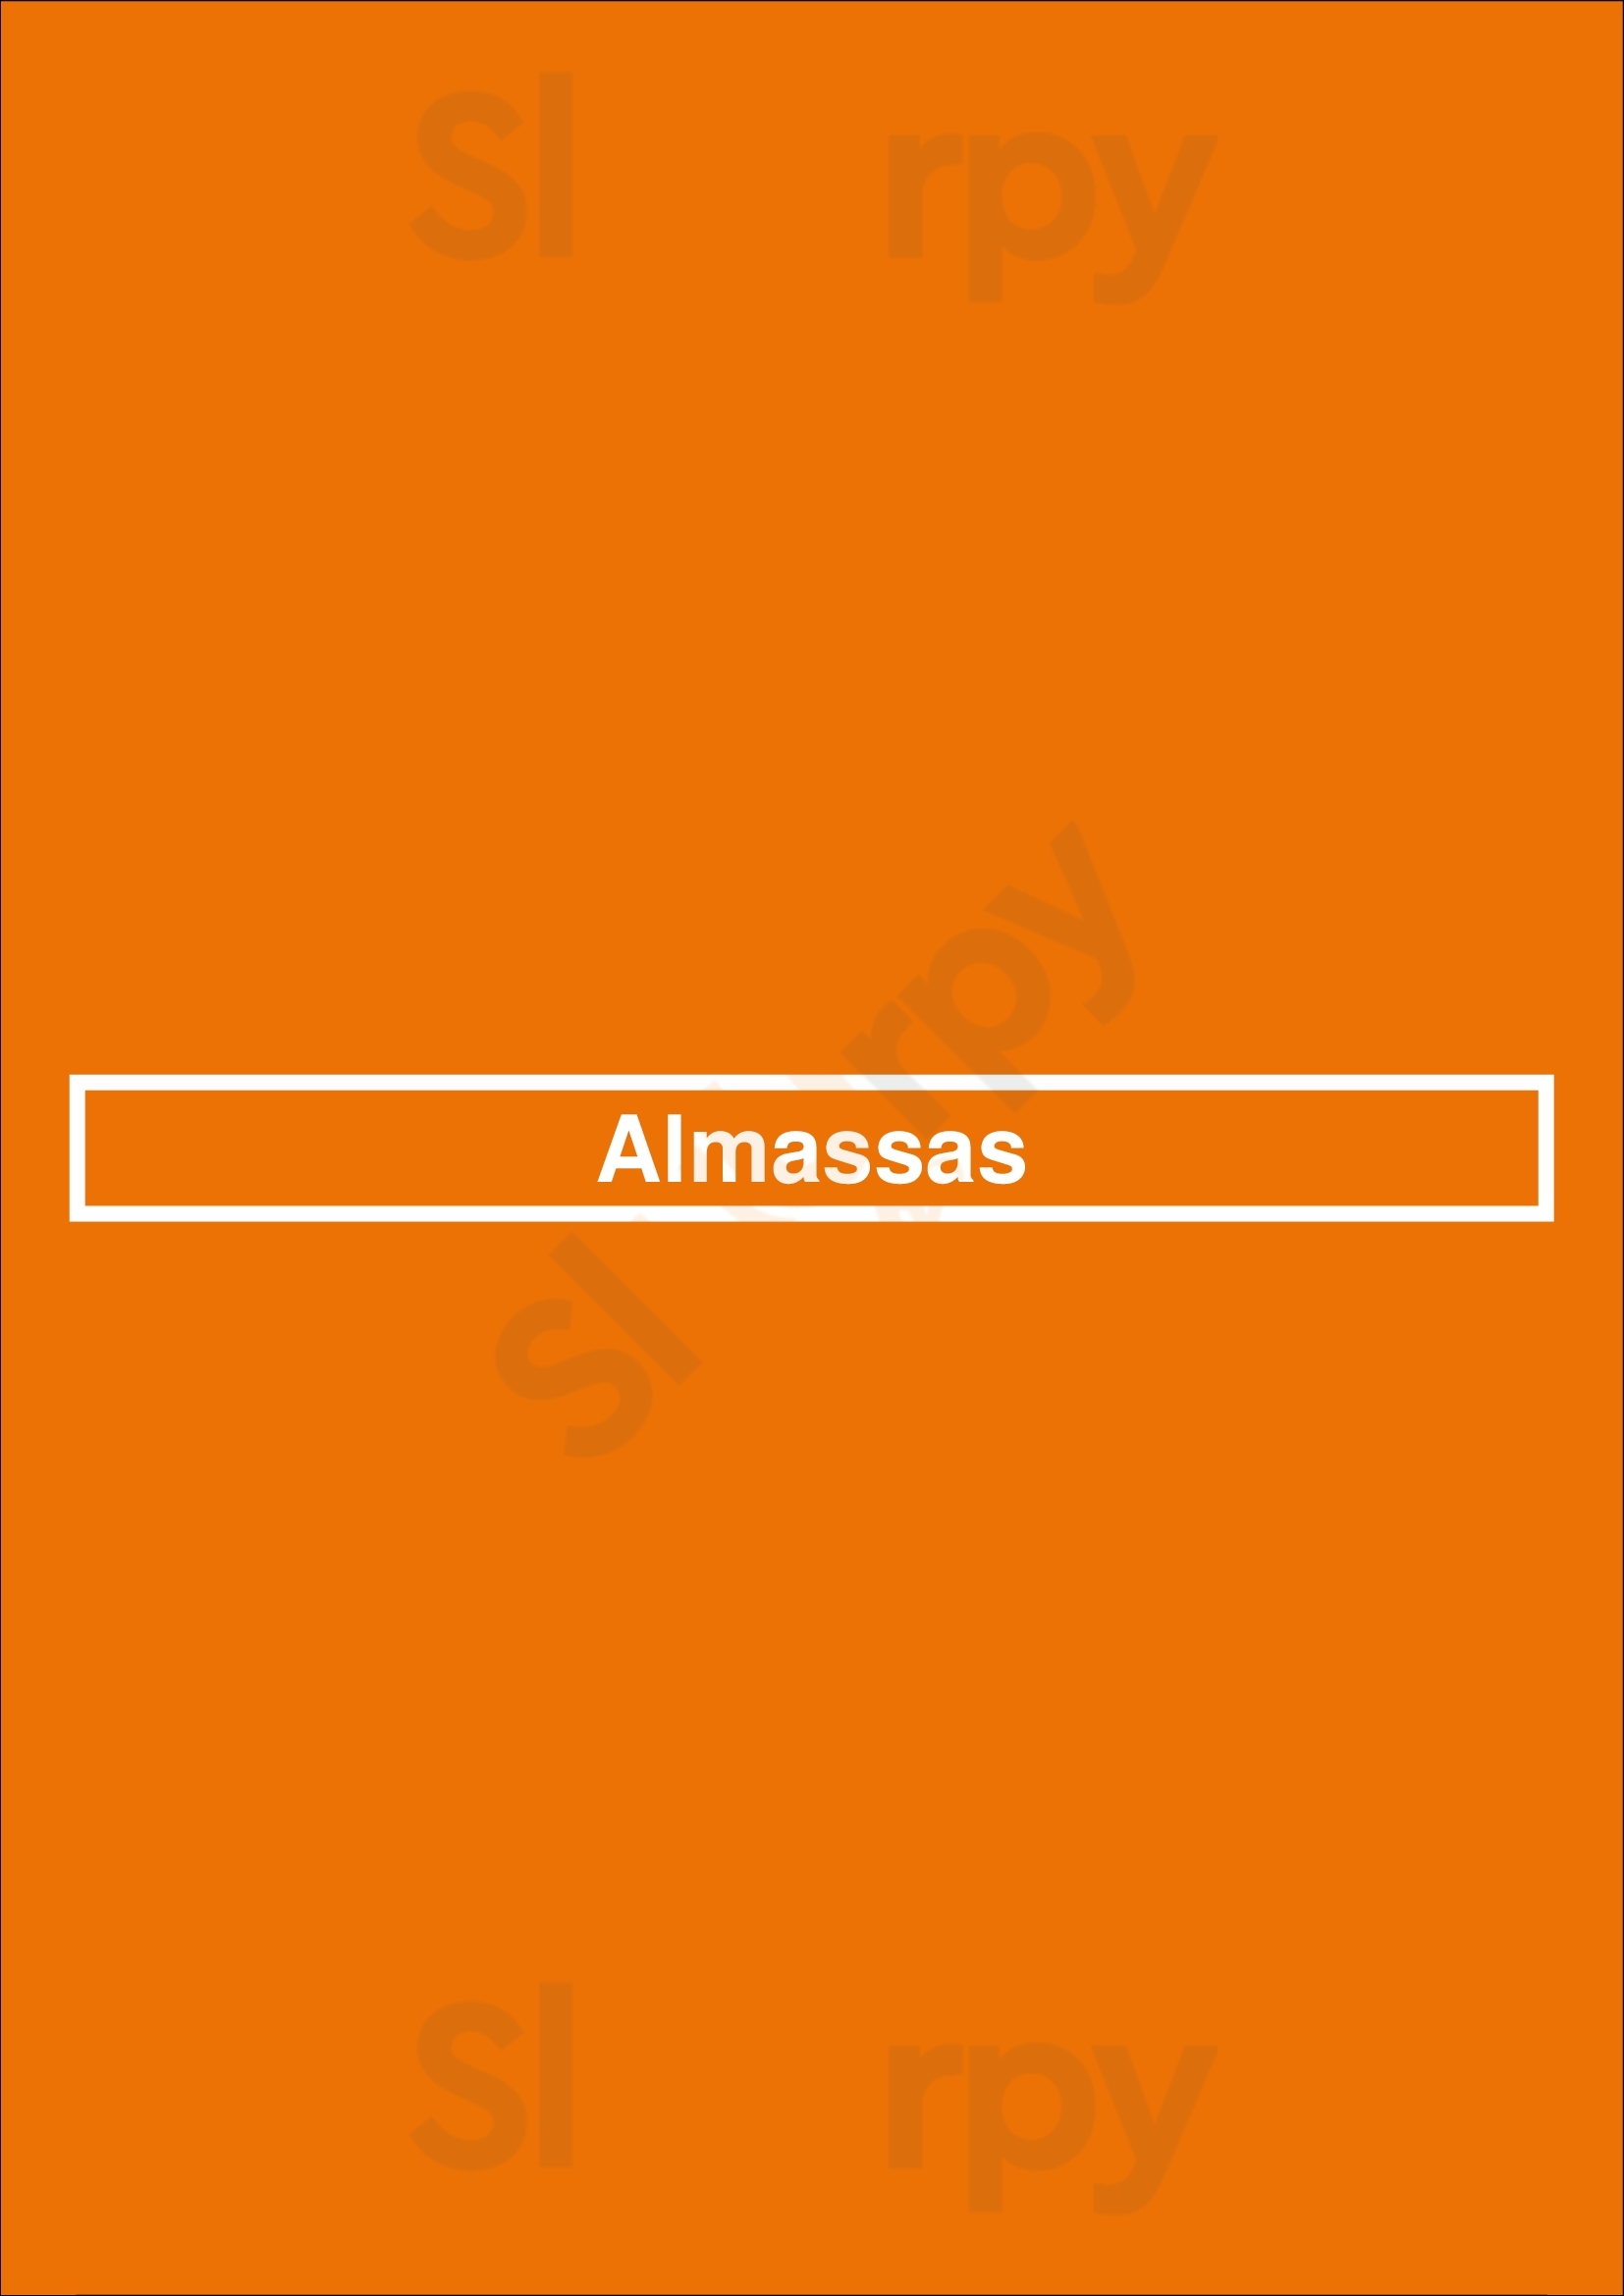 Almassas Lisboa Menu - 1